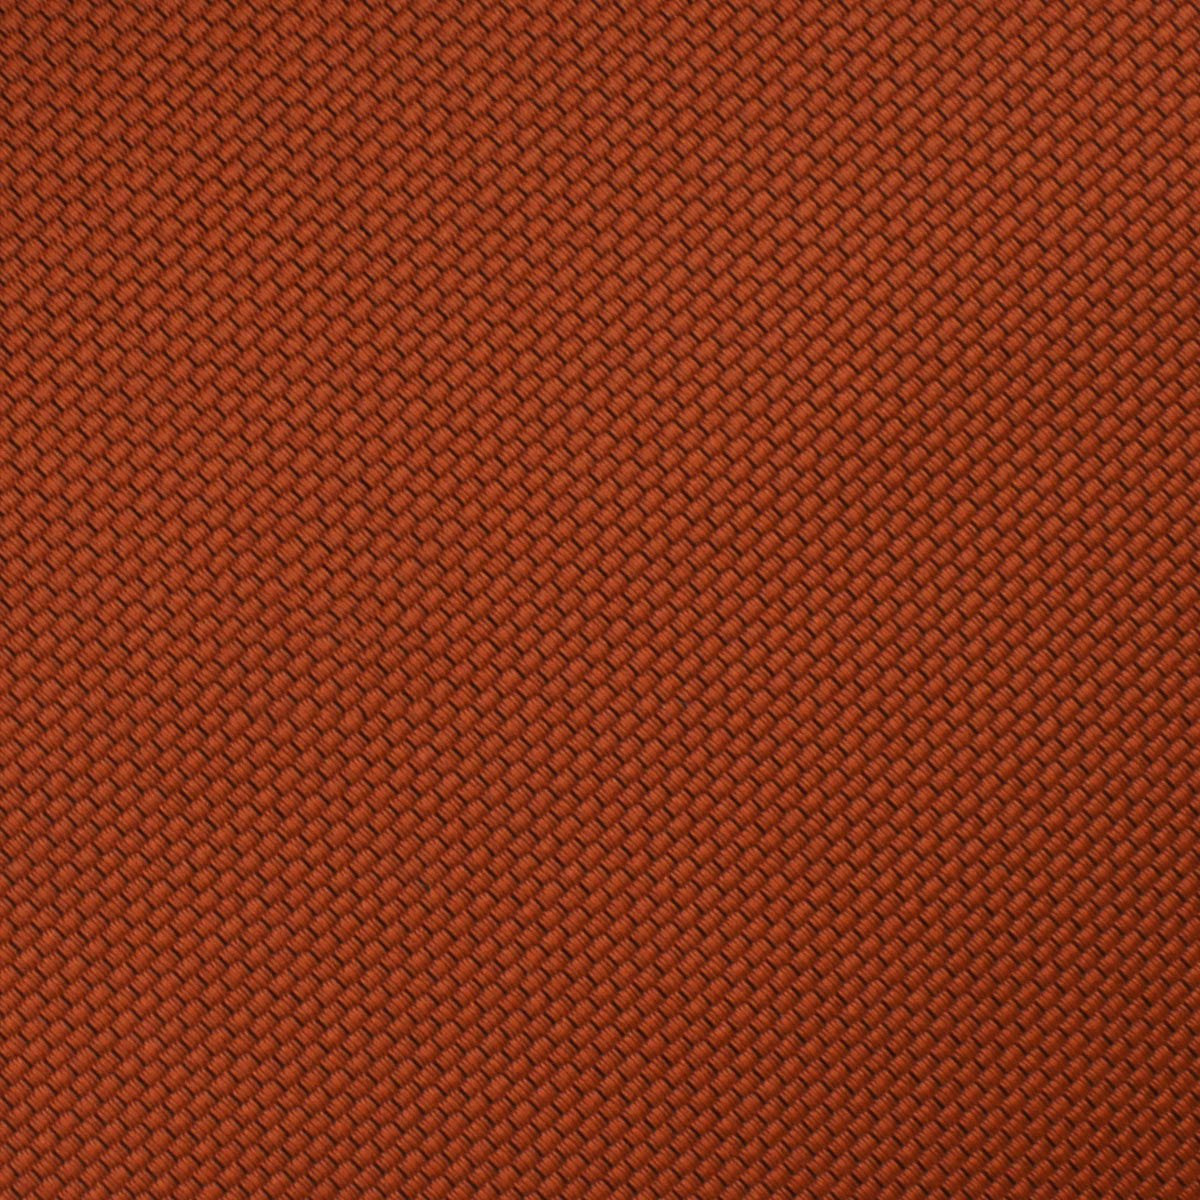 Burnt Orange Rust Weave Pocket Square Fabric